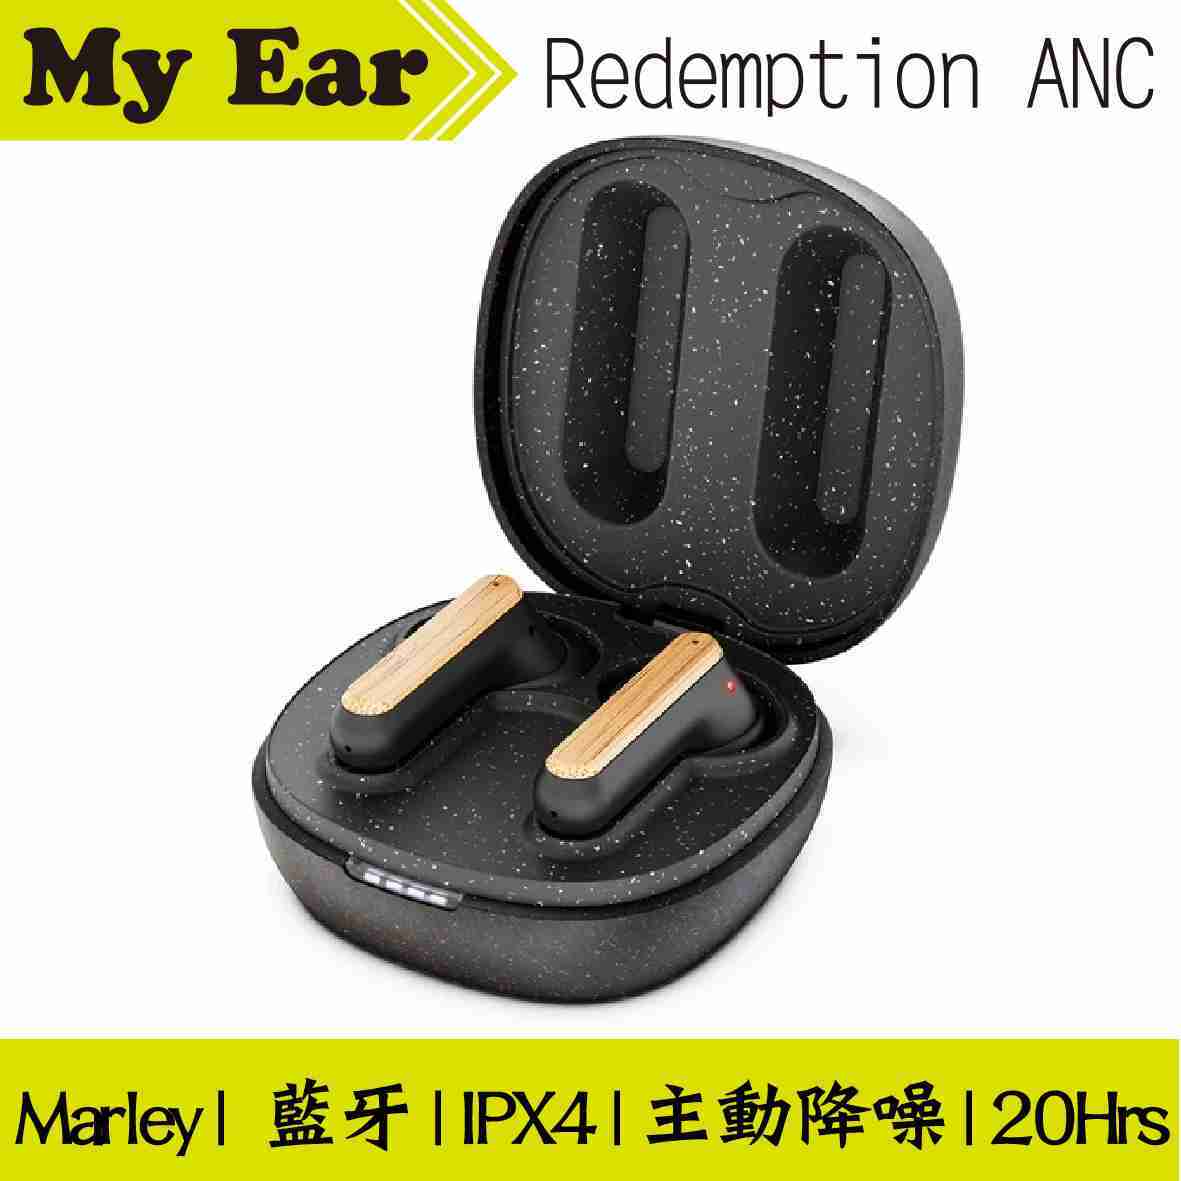 Marley Redemption ANC 真無線藍牙耳機 主動降噪 | My Ear耳機專門店